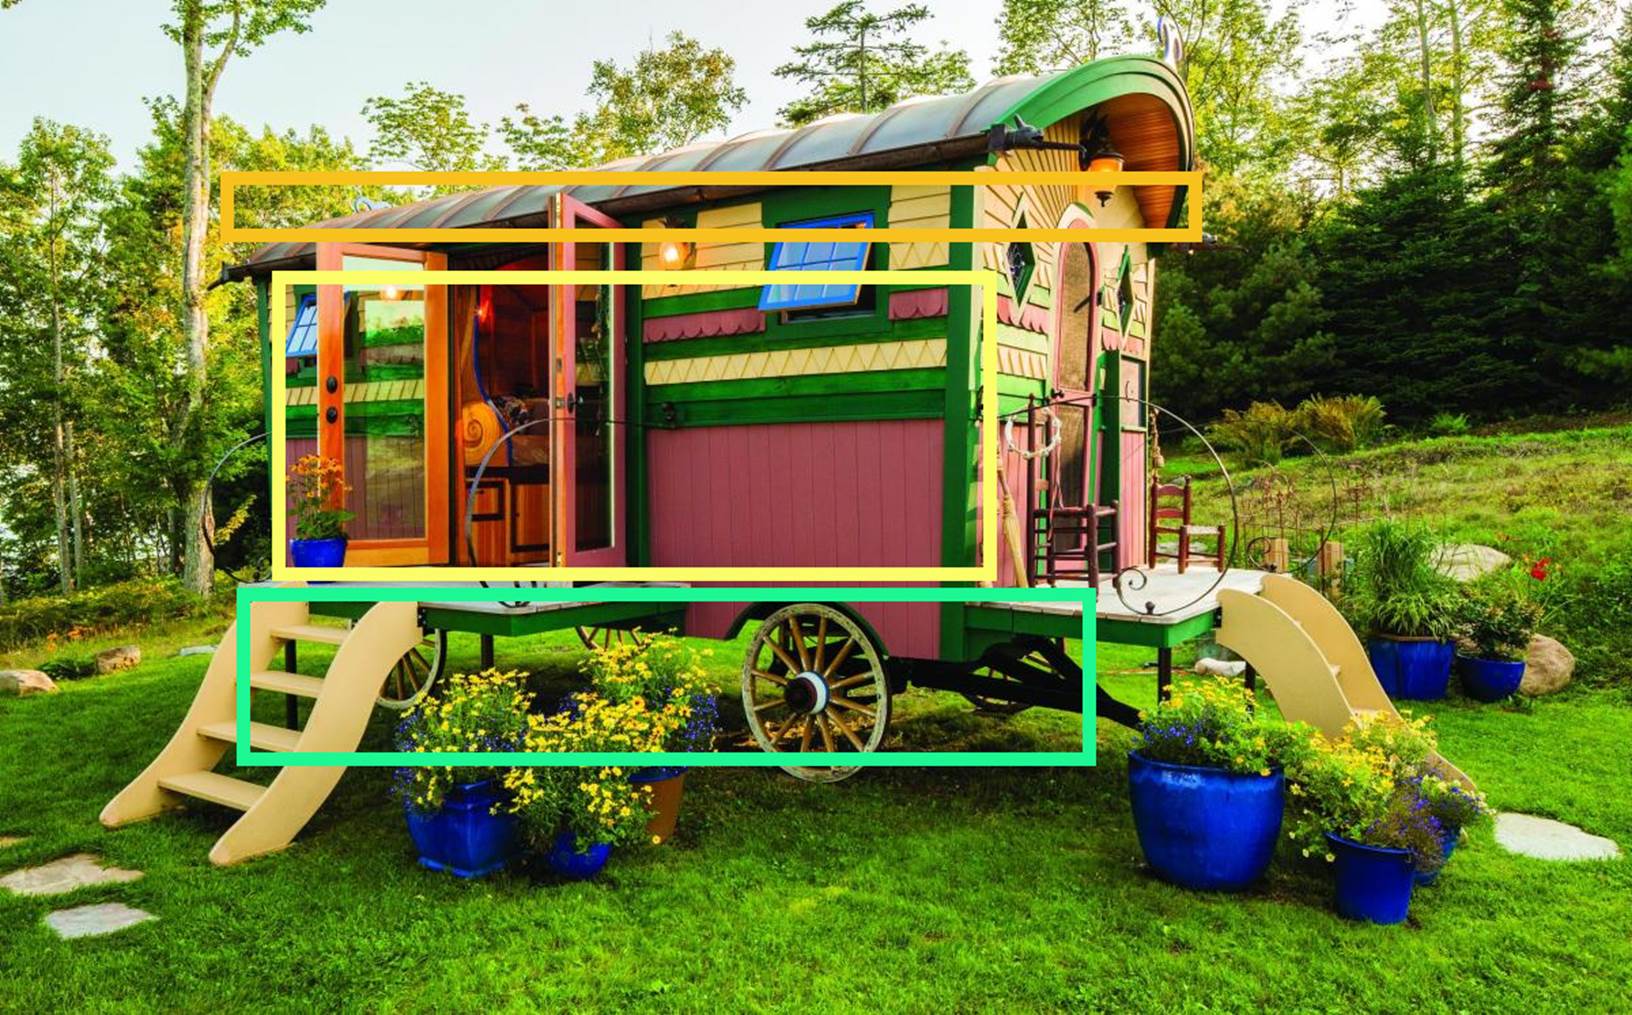 A colorful wagon in a garden

Description automatically generated